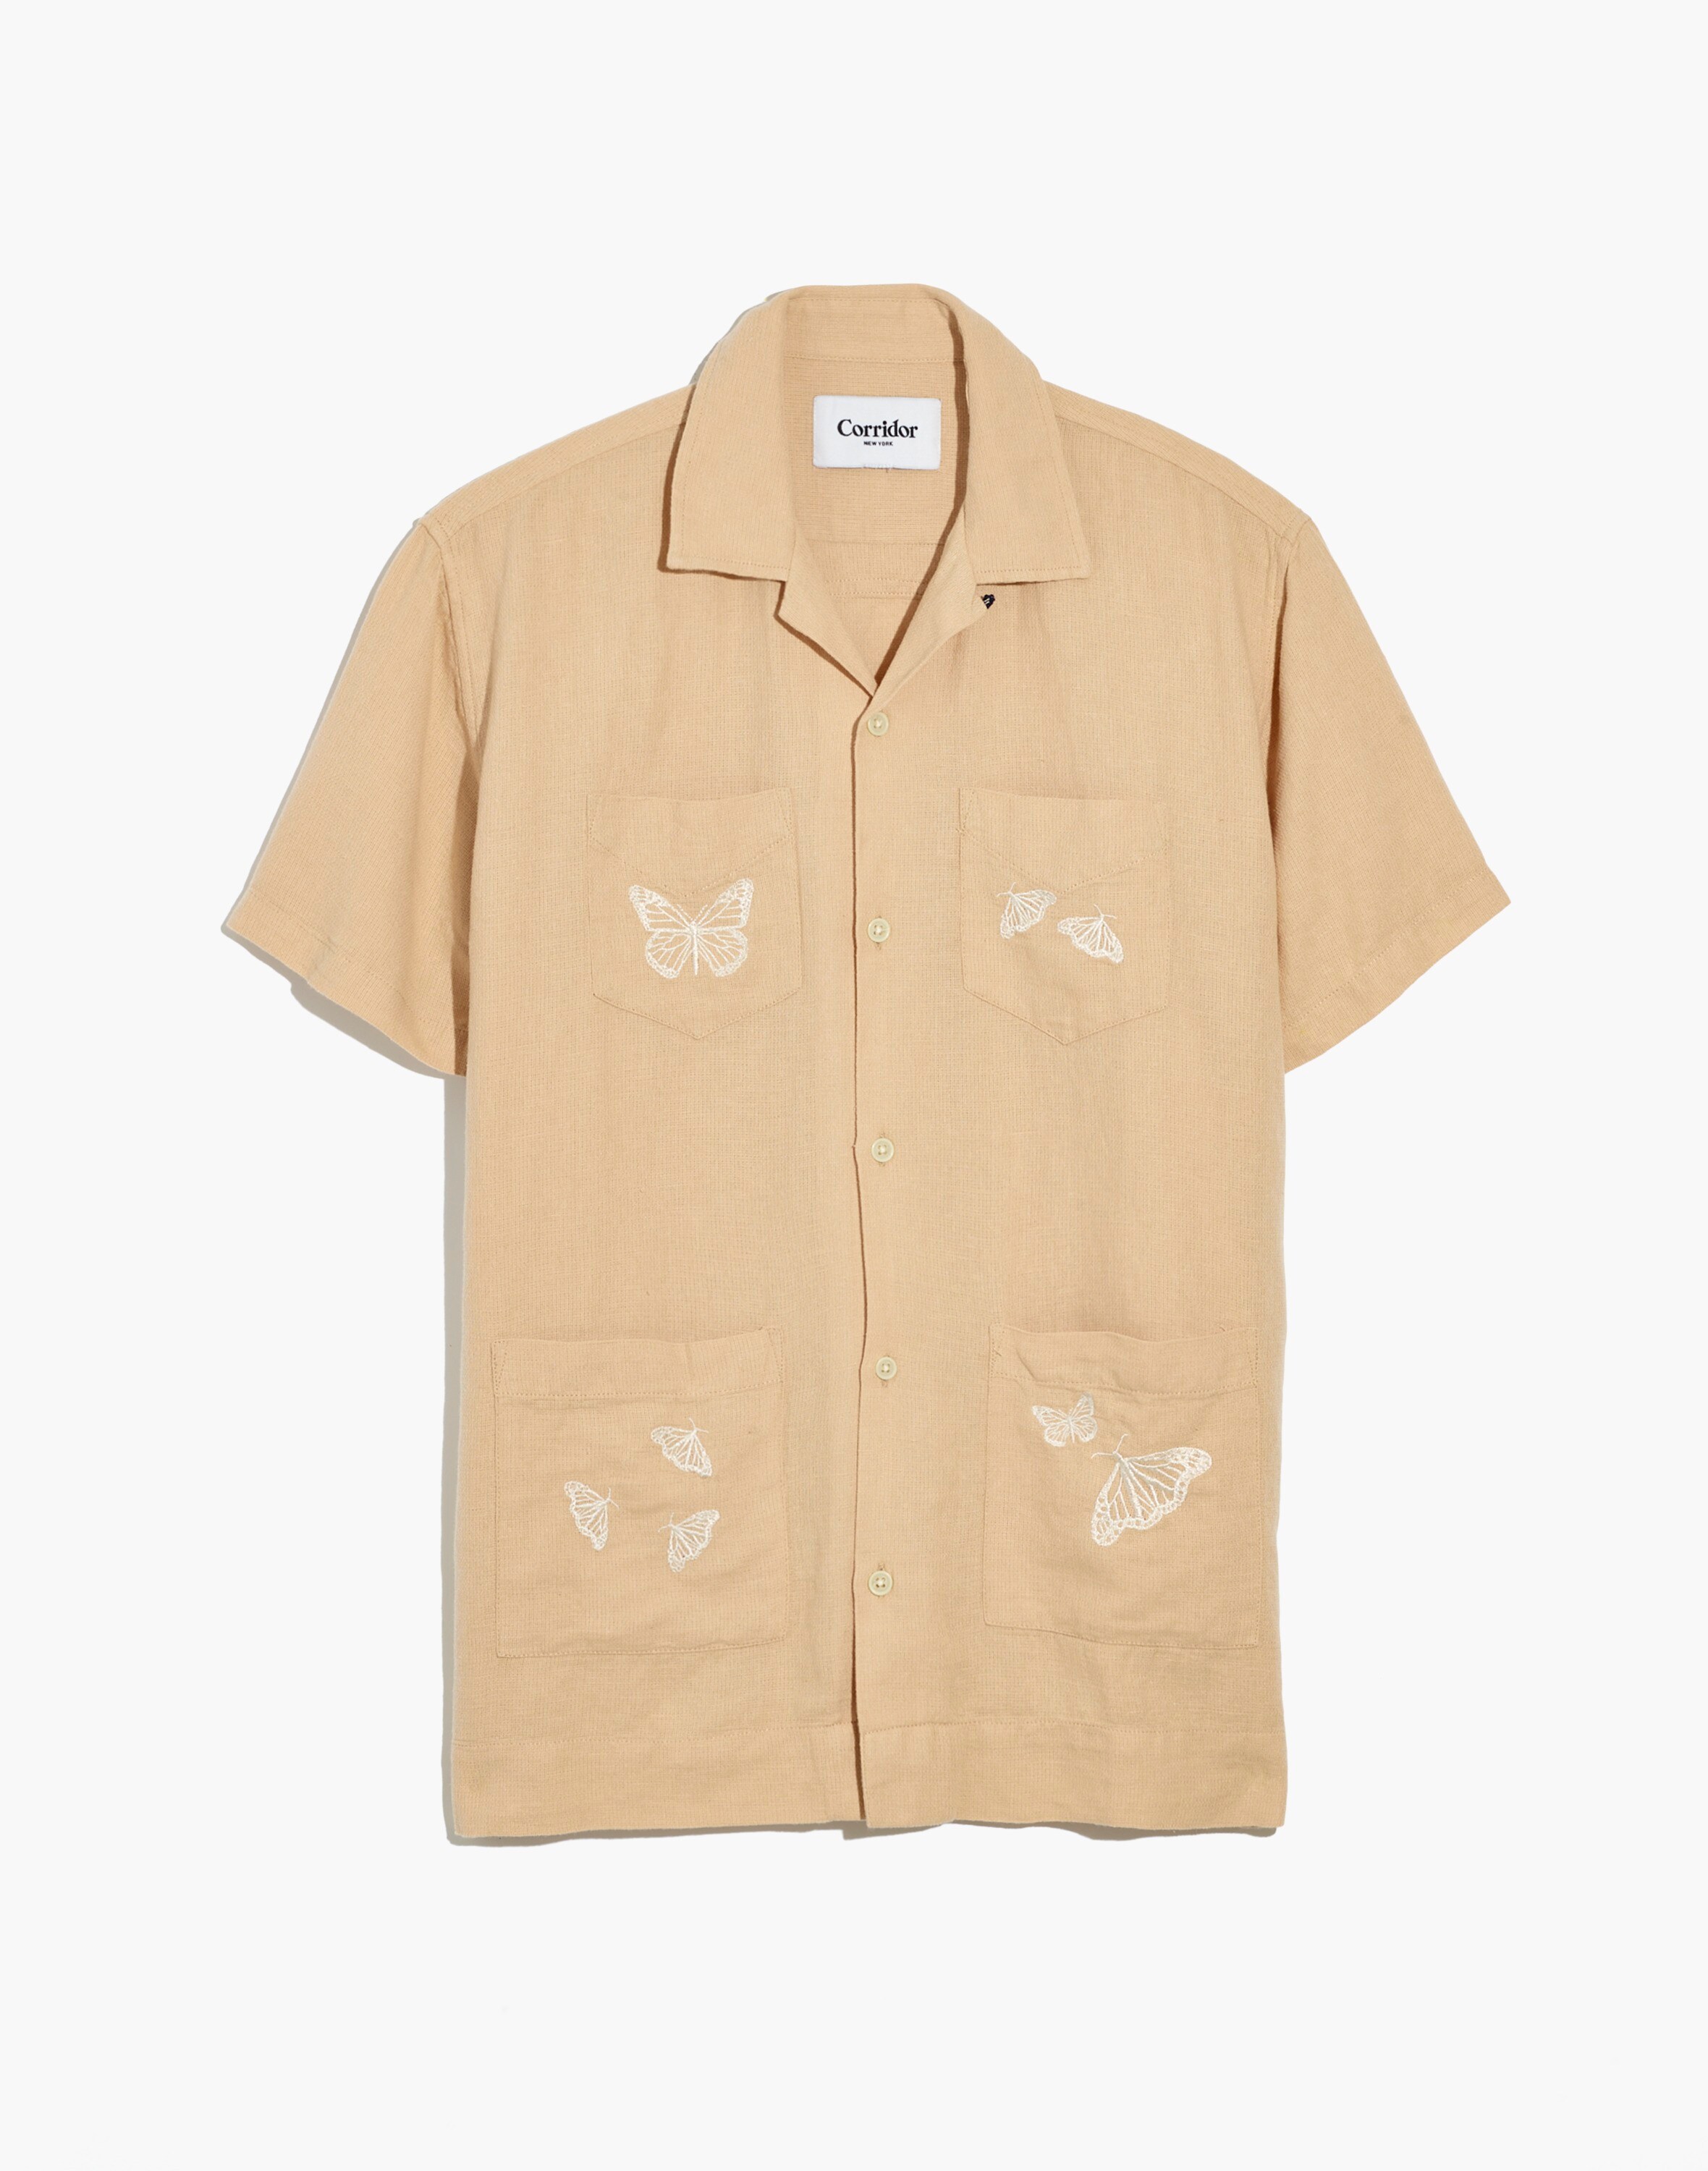 Corridor® Butterfly Embroidered Summer Shirt